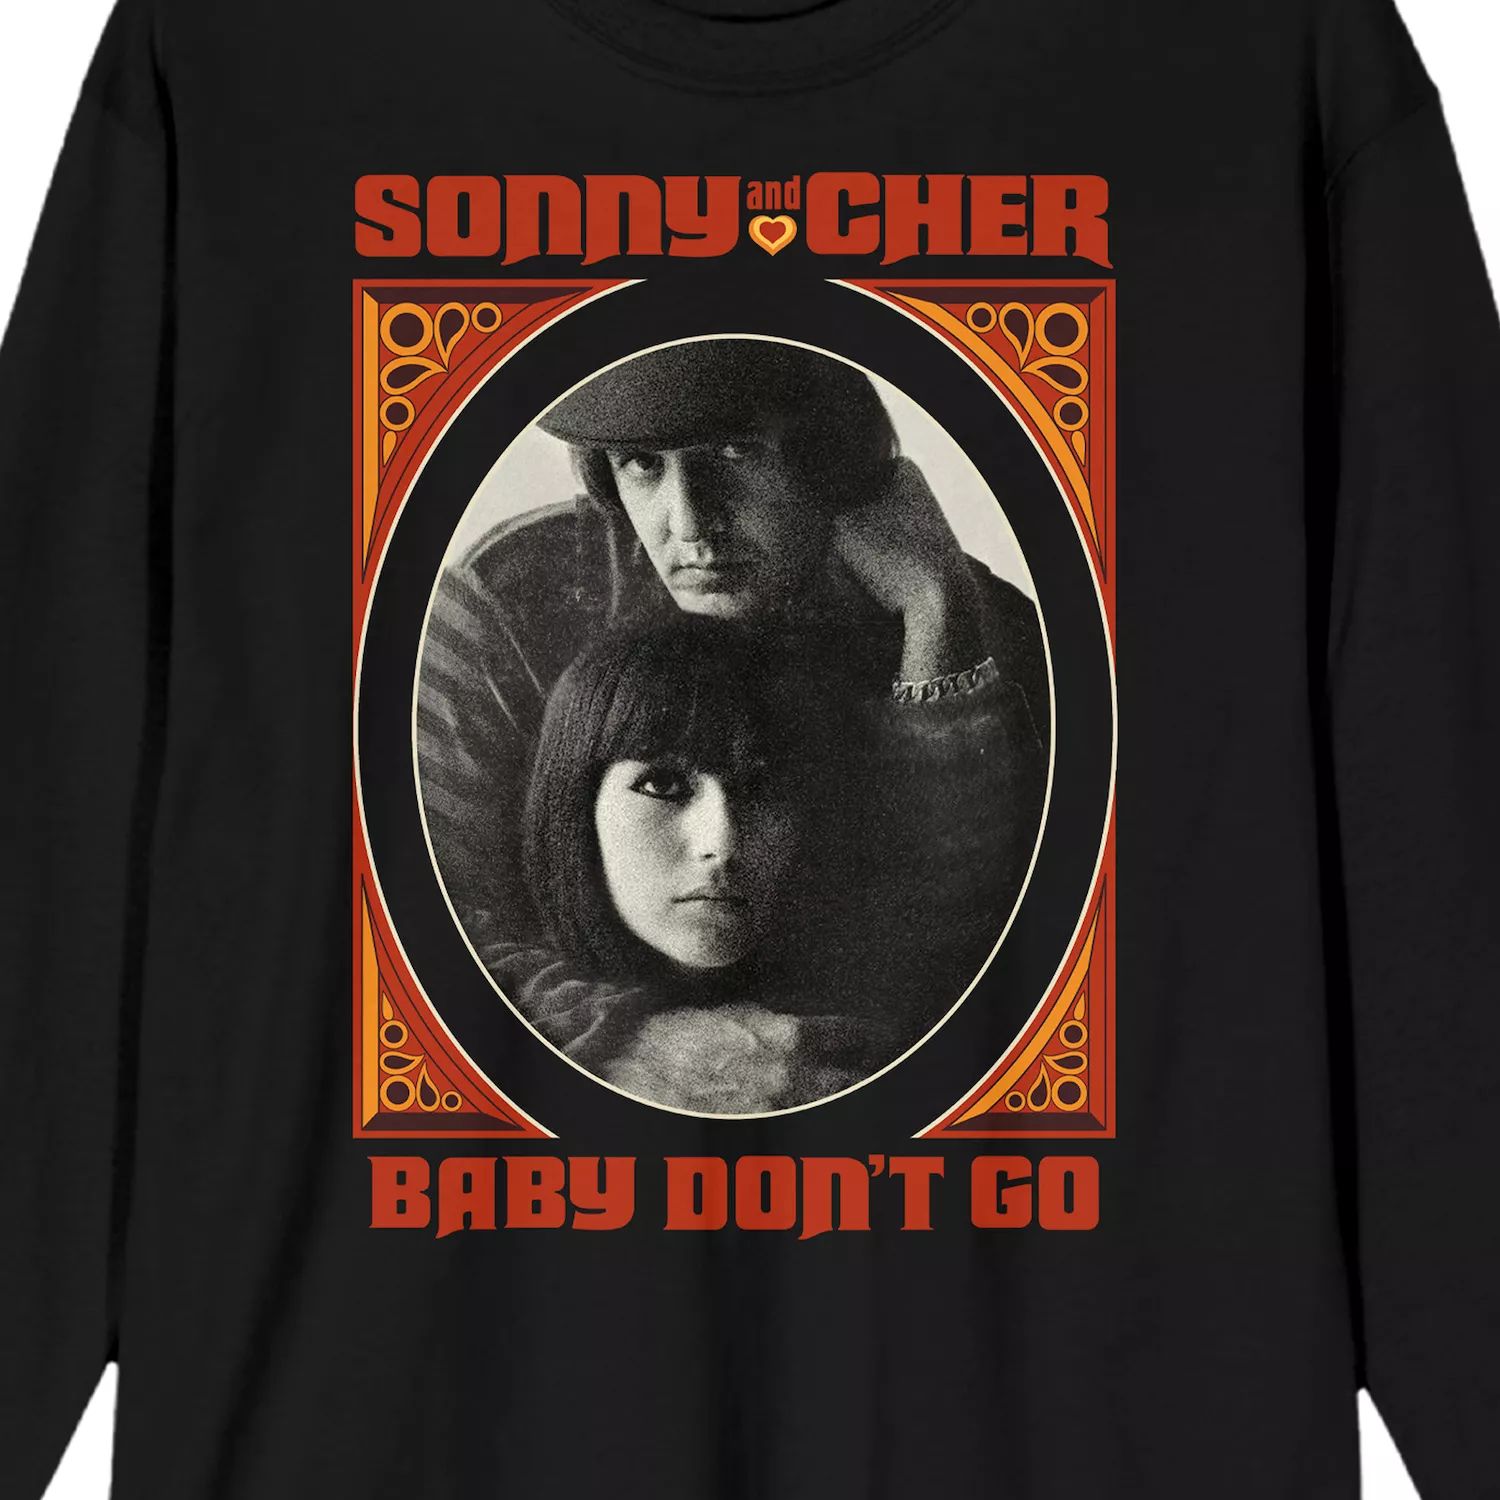 Мужская футболка с рисунком Sonny & Cher Baby Don't Go Licensed Character